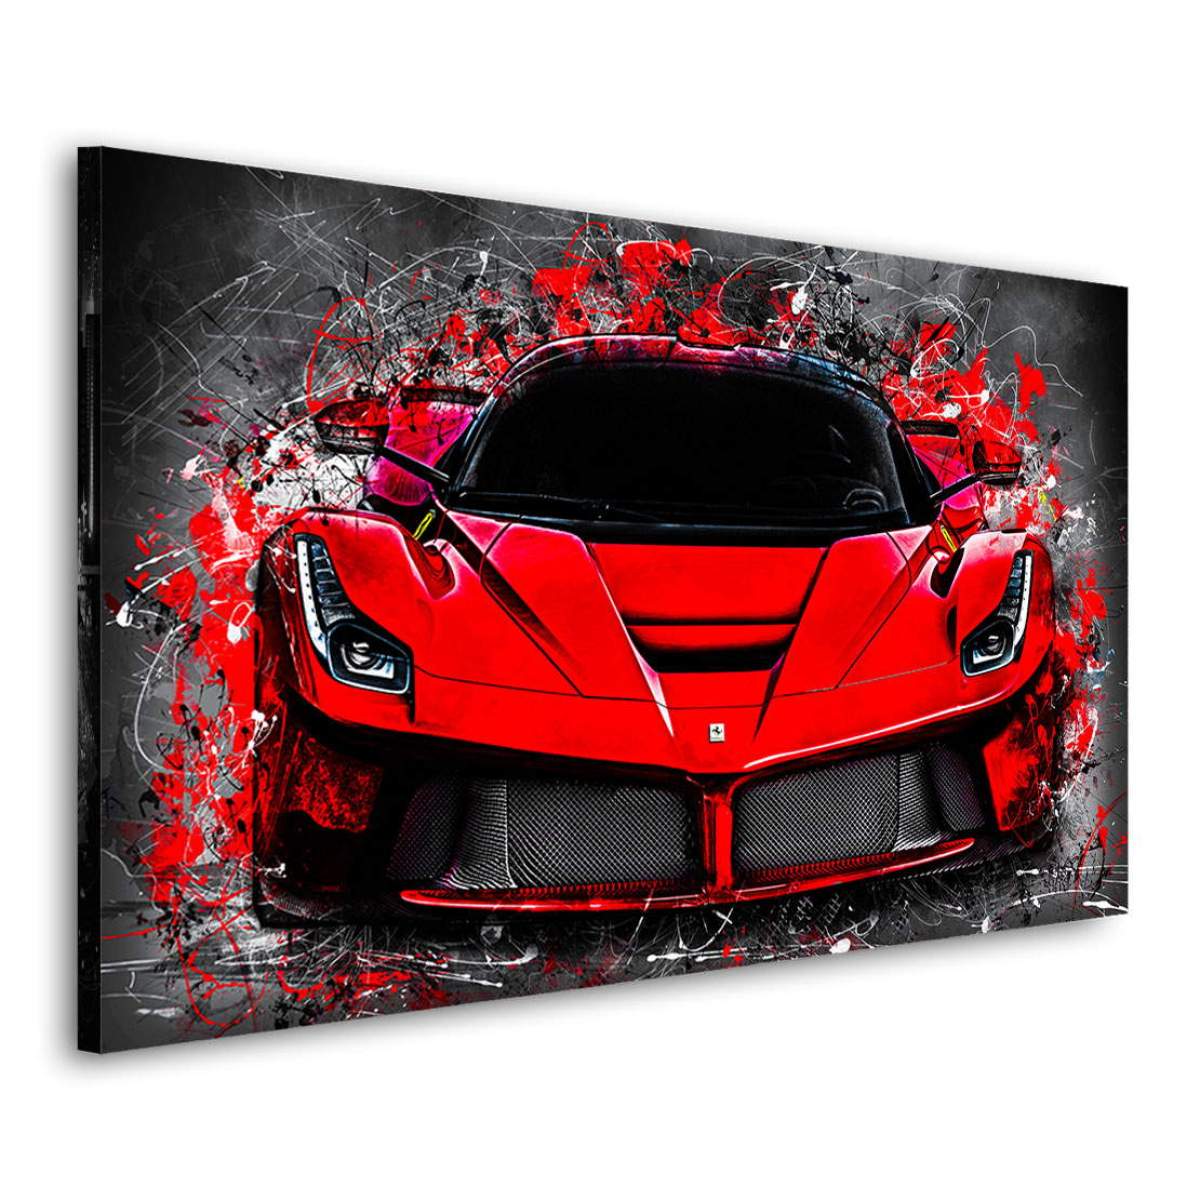 Leinwand Bild XXL Ferrari F430 Auto Modern Abstrakt Poster Wandbild Kunstdruck 